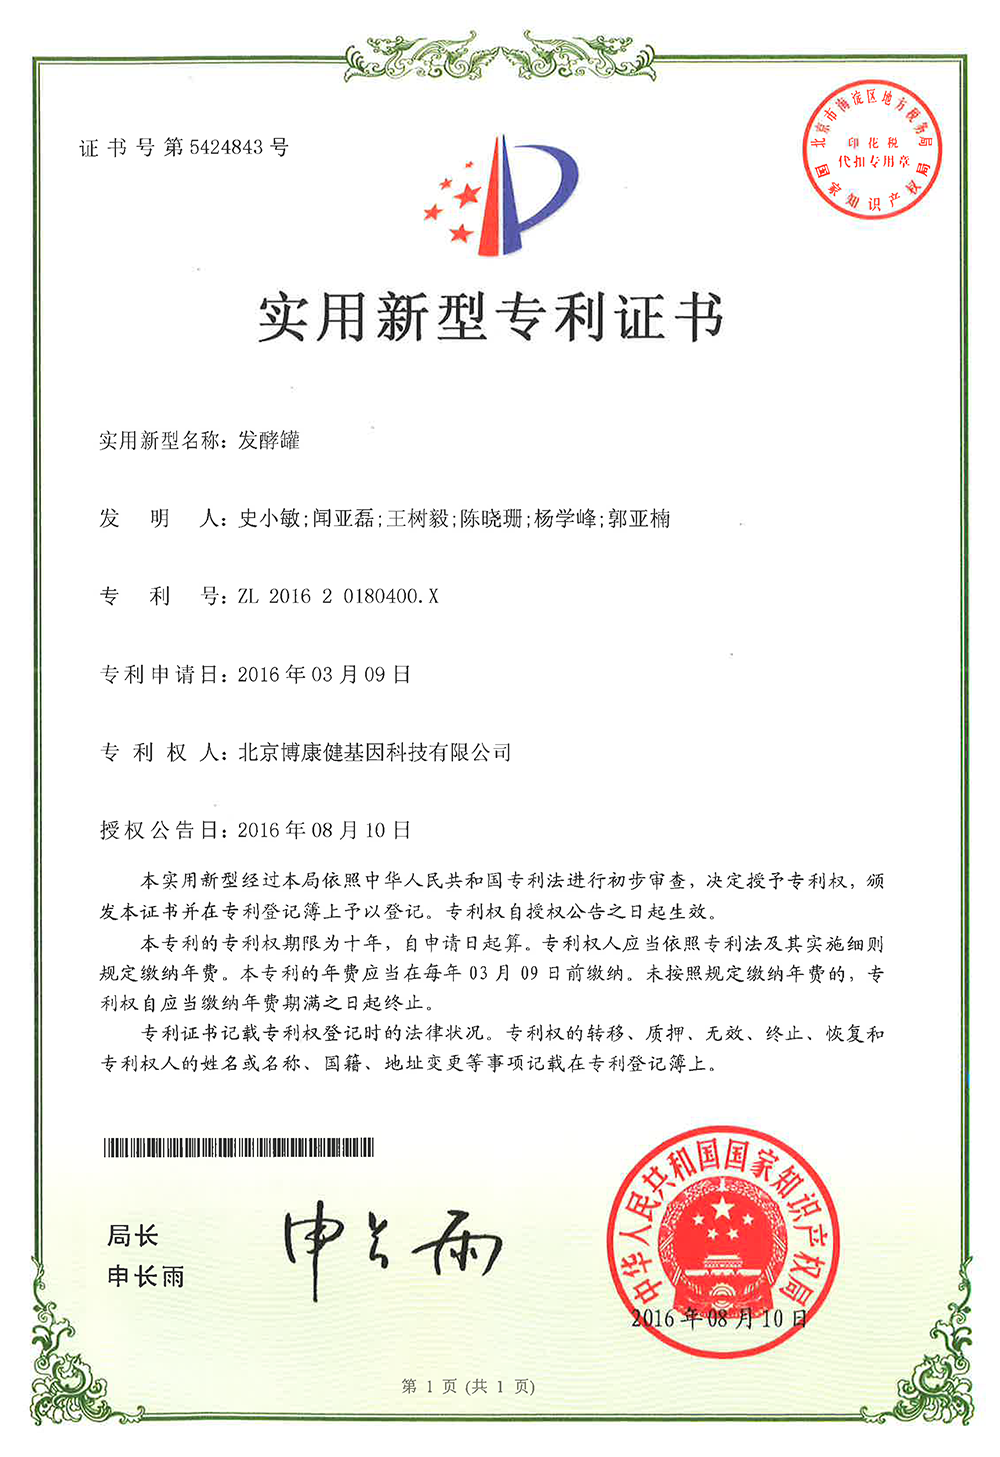 Fermentation tank - utility model patent certificate